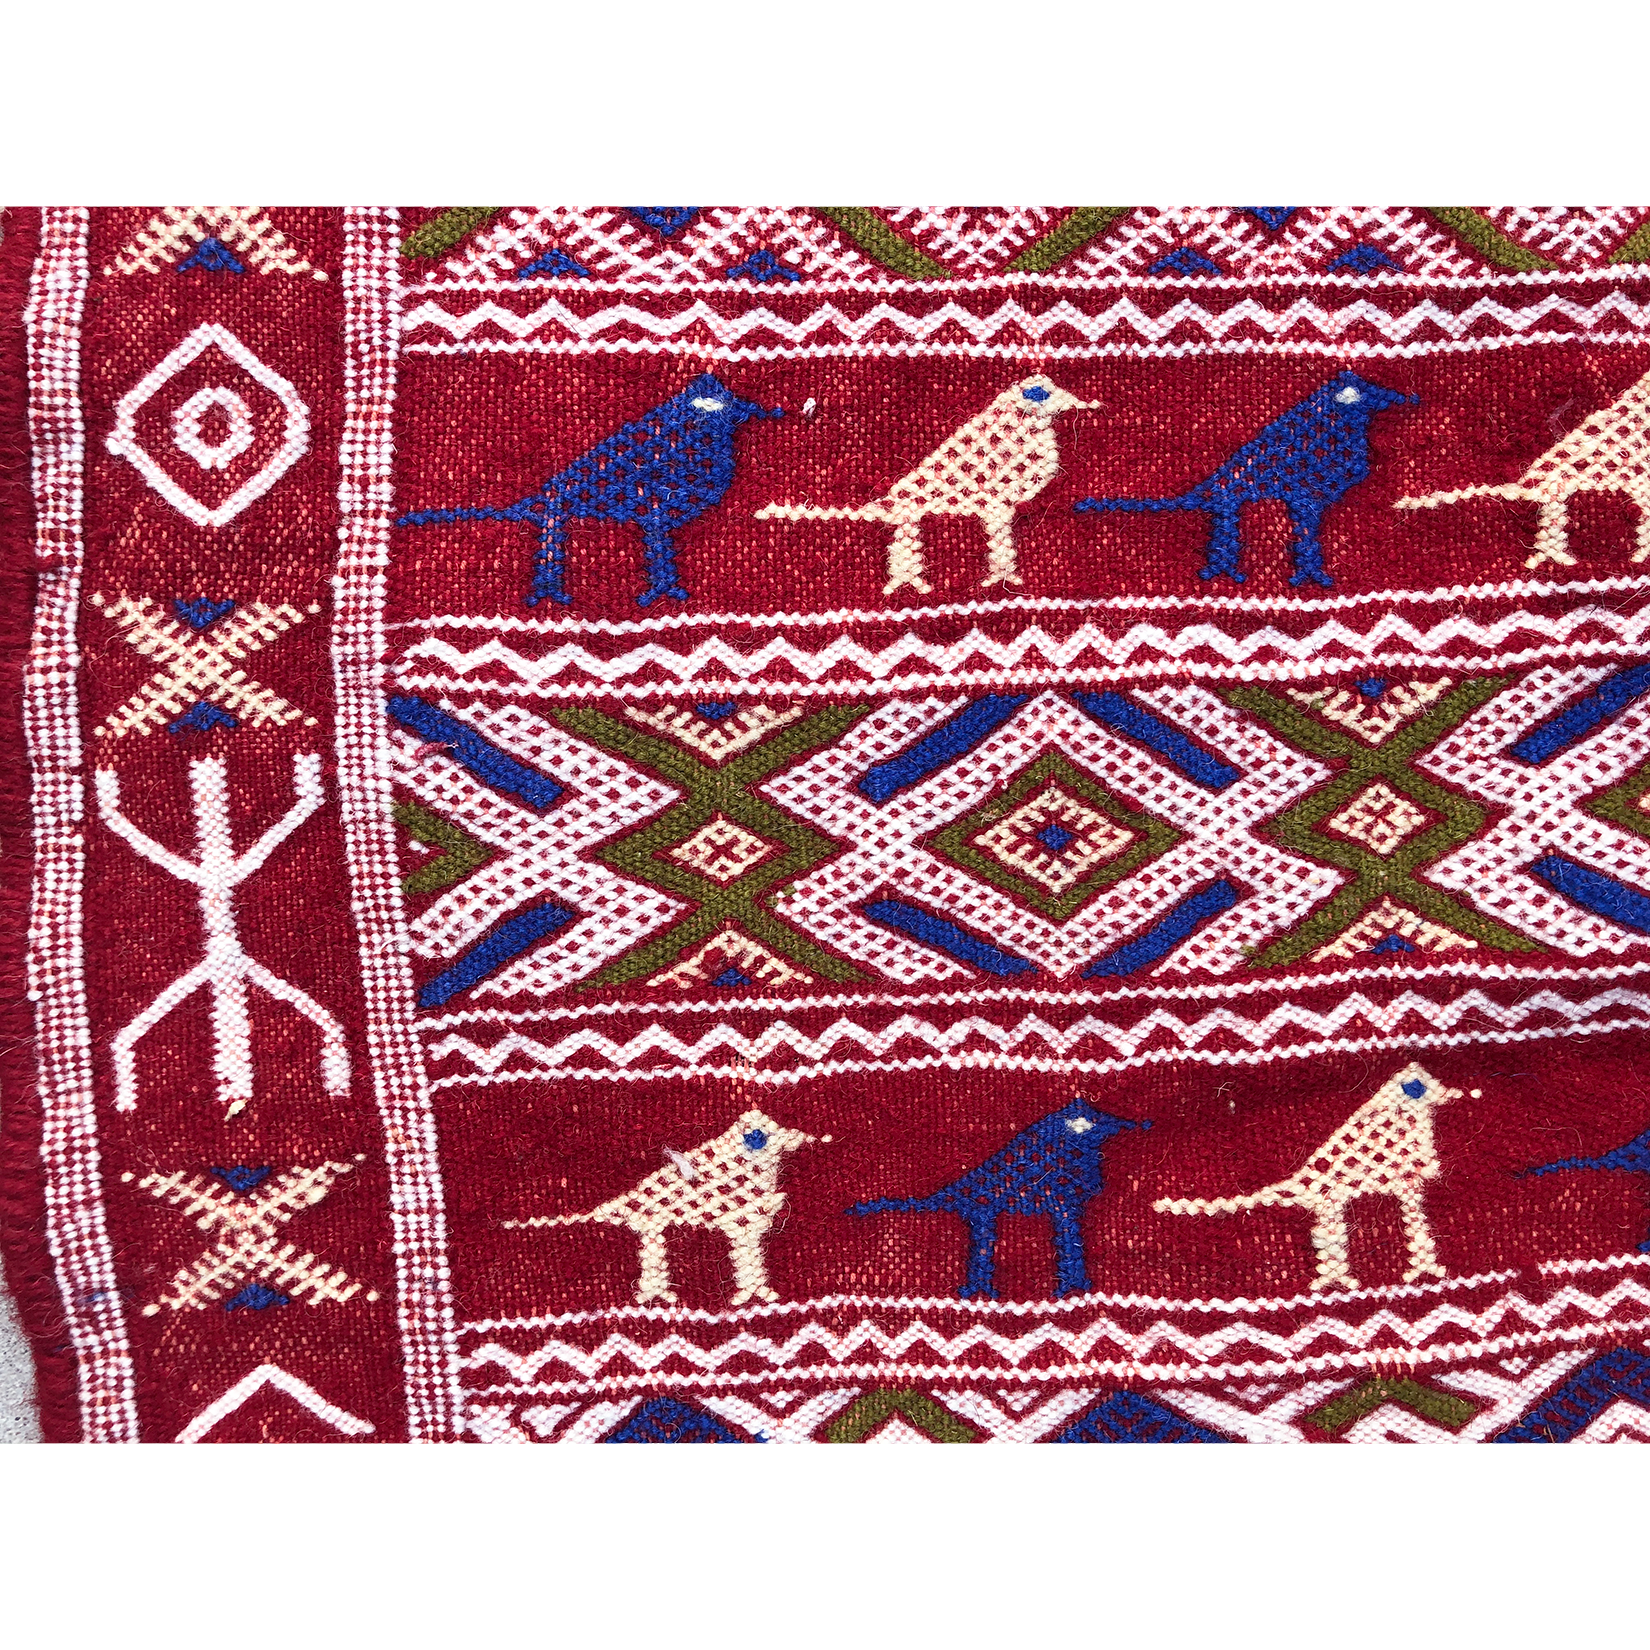 HICHAM - Bright Moroccan flatweave rug with birds - Kantara | Moroccan Rugs